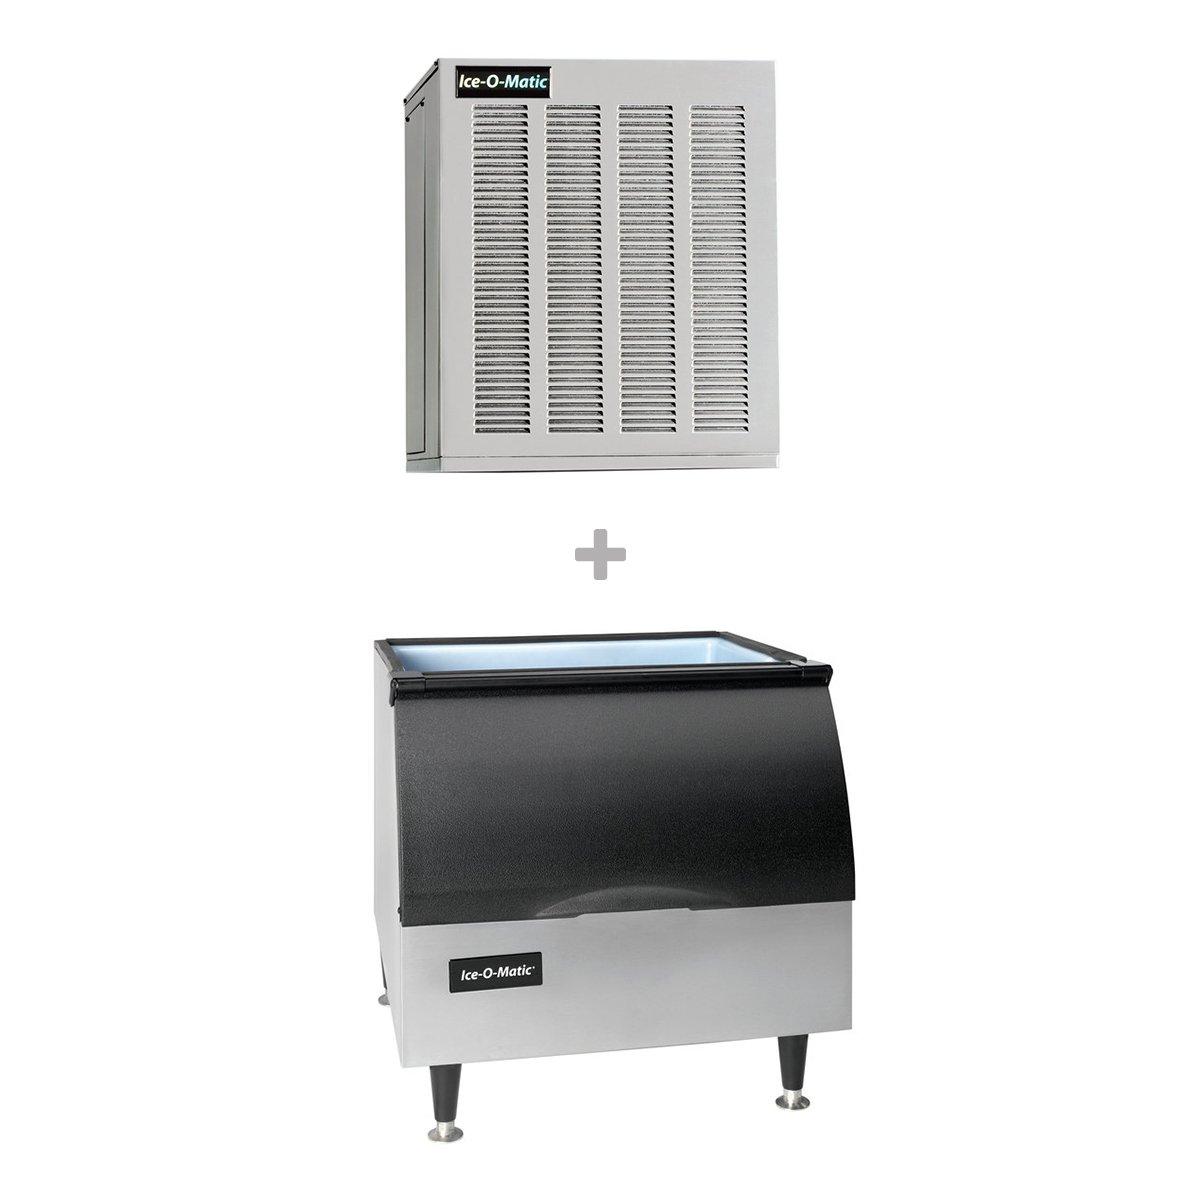 Ice-O-Matic GEM0650A/B25PP 740 lb Nugget Ice Maker w/ Bin - 242 lb Storage, Air Cooled, 115v